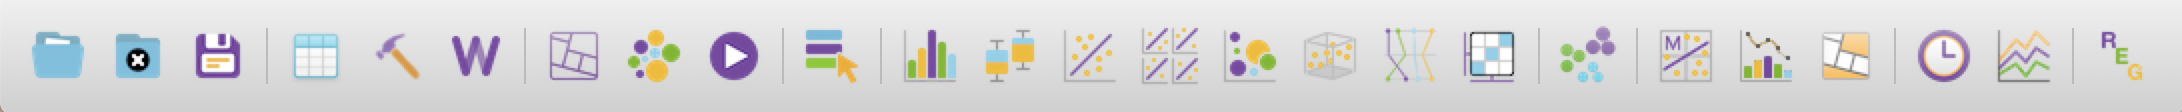 GeoDa Toolbar Icons